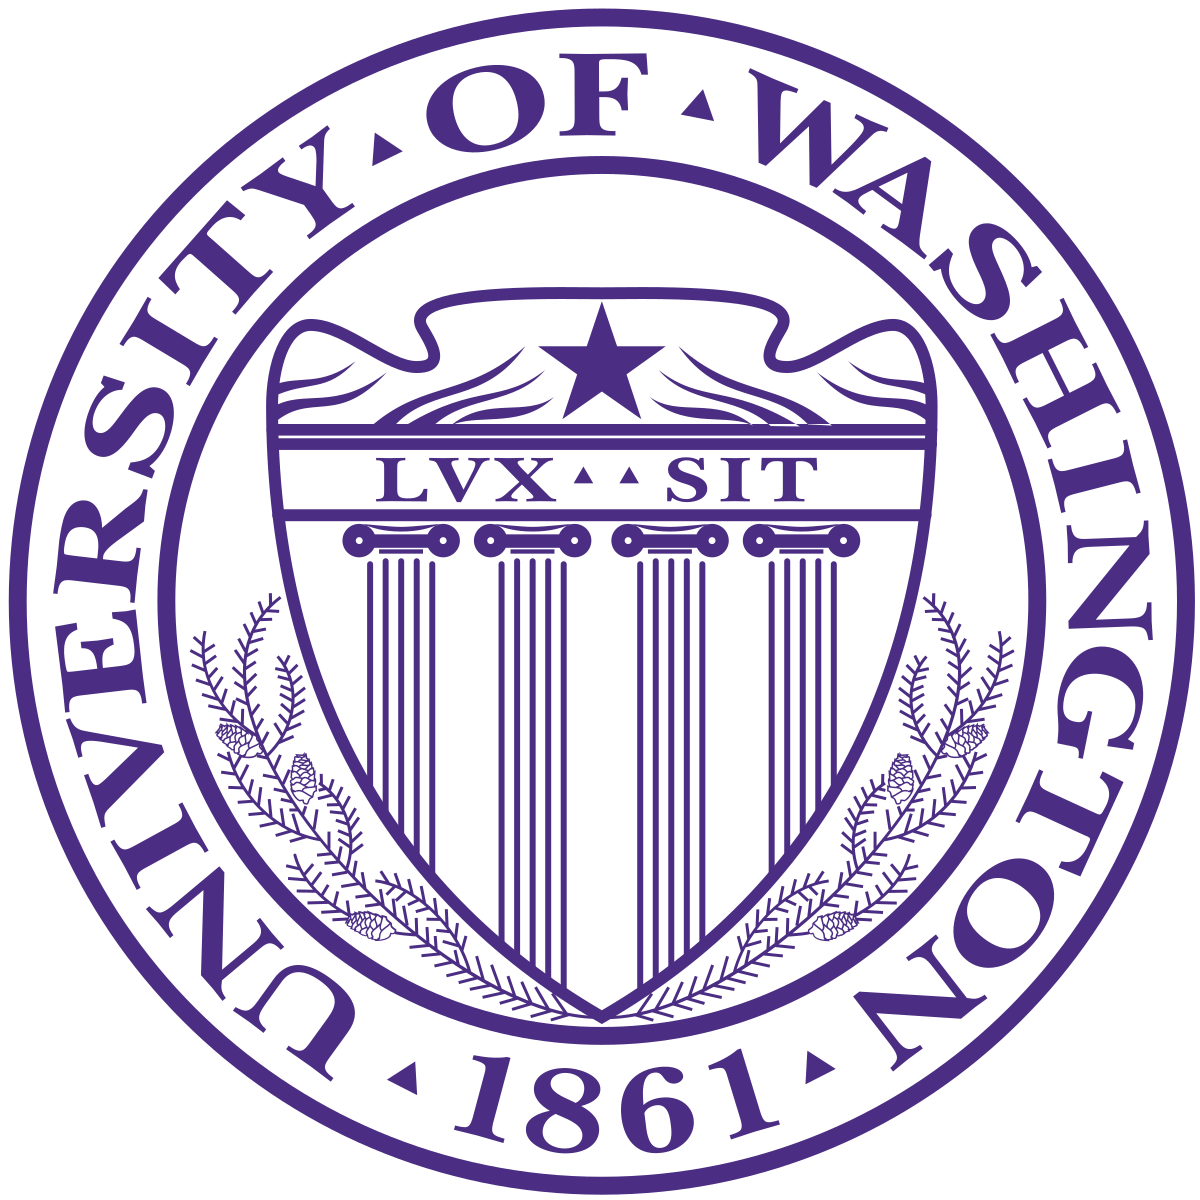 Gamma chapter installed at the University of Washington